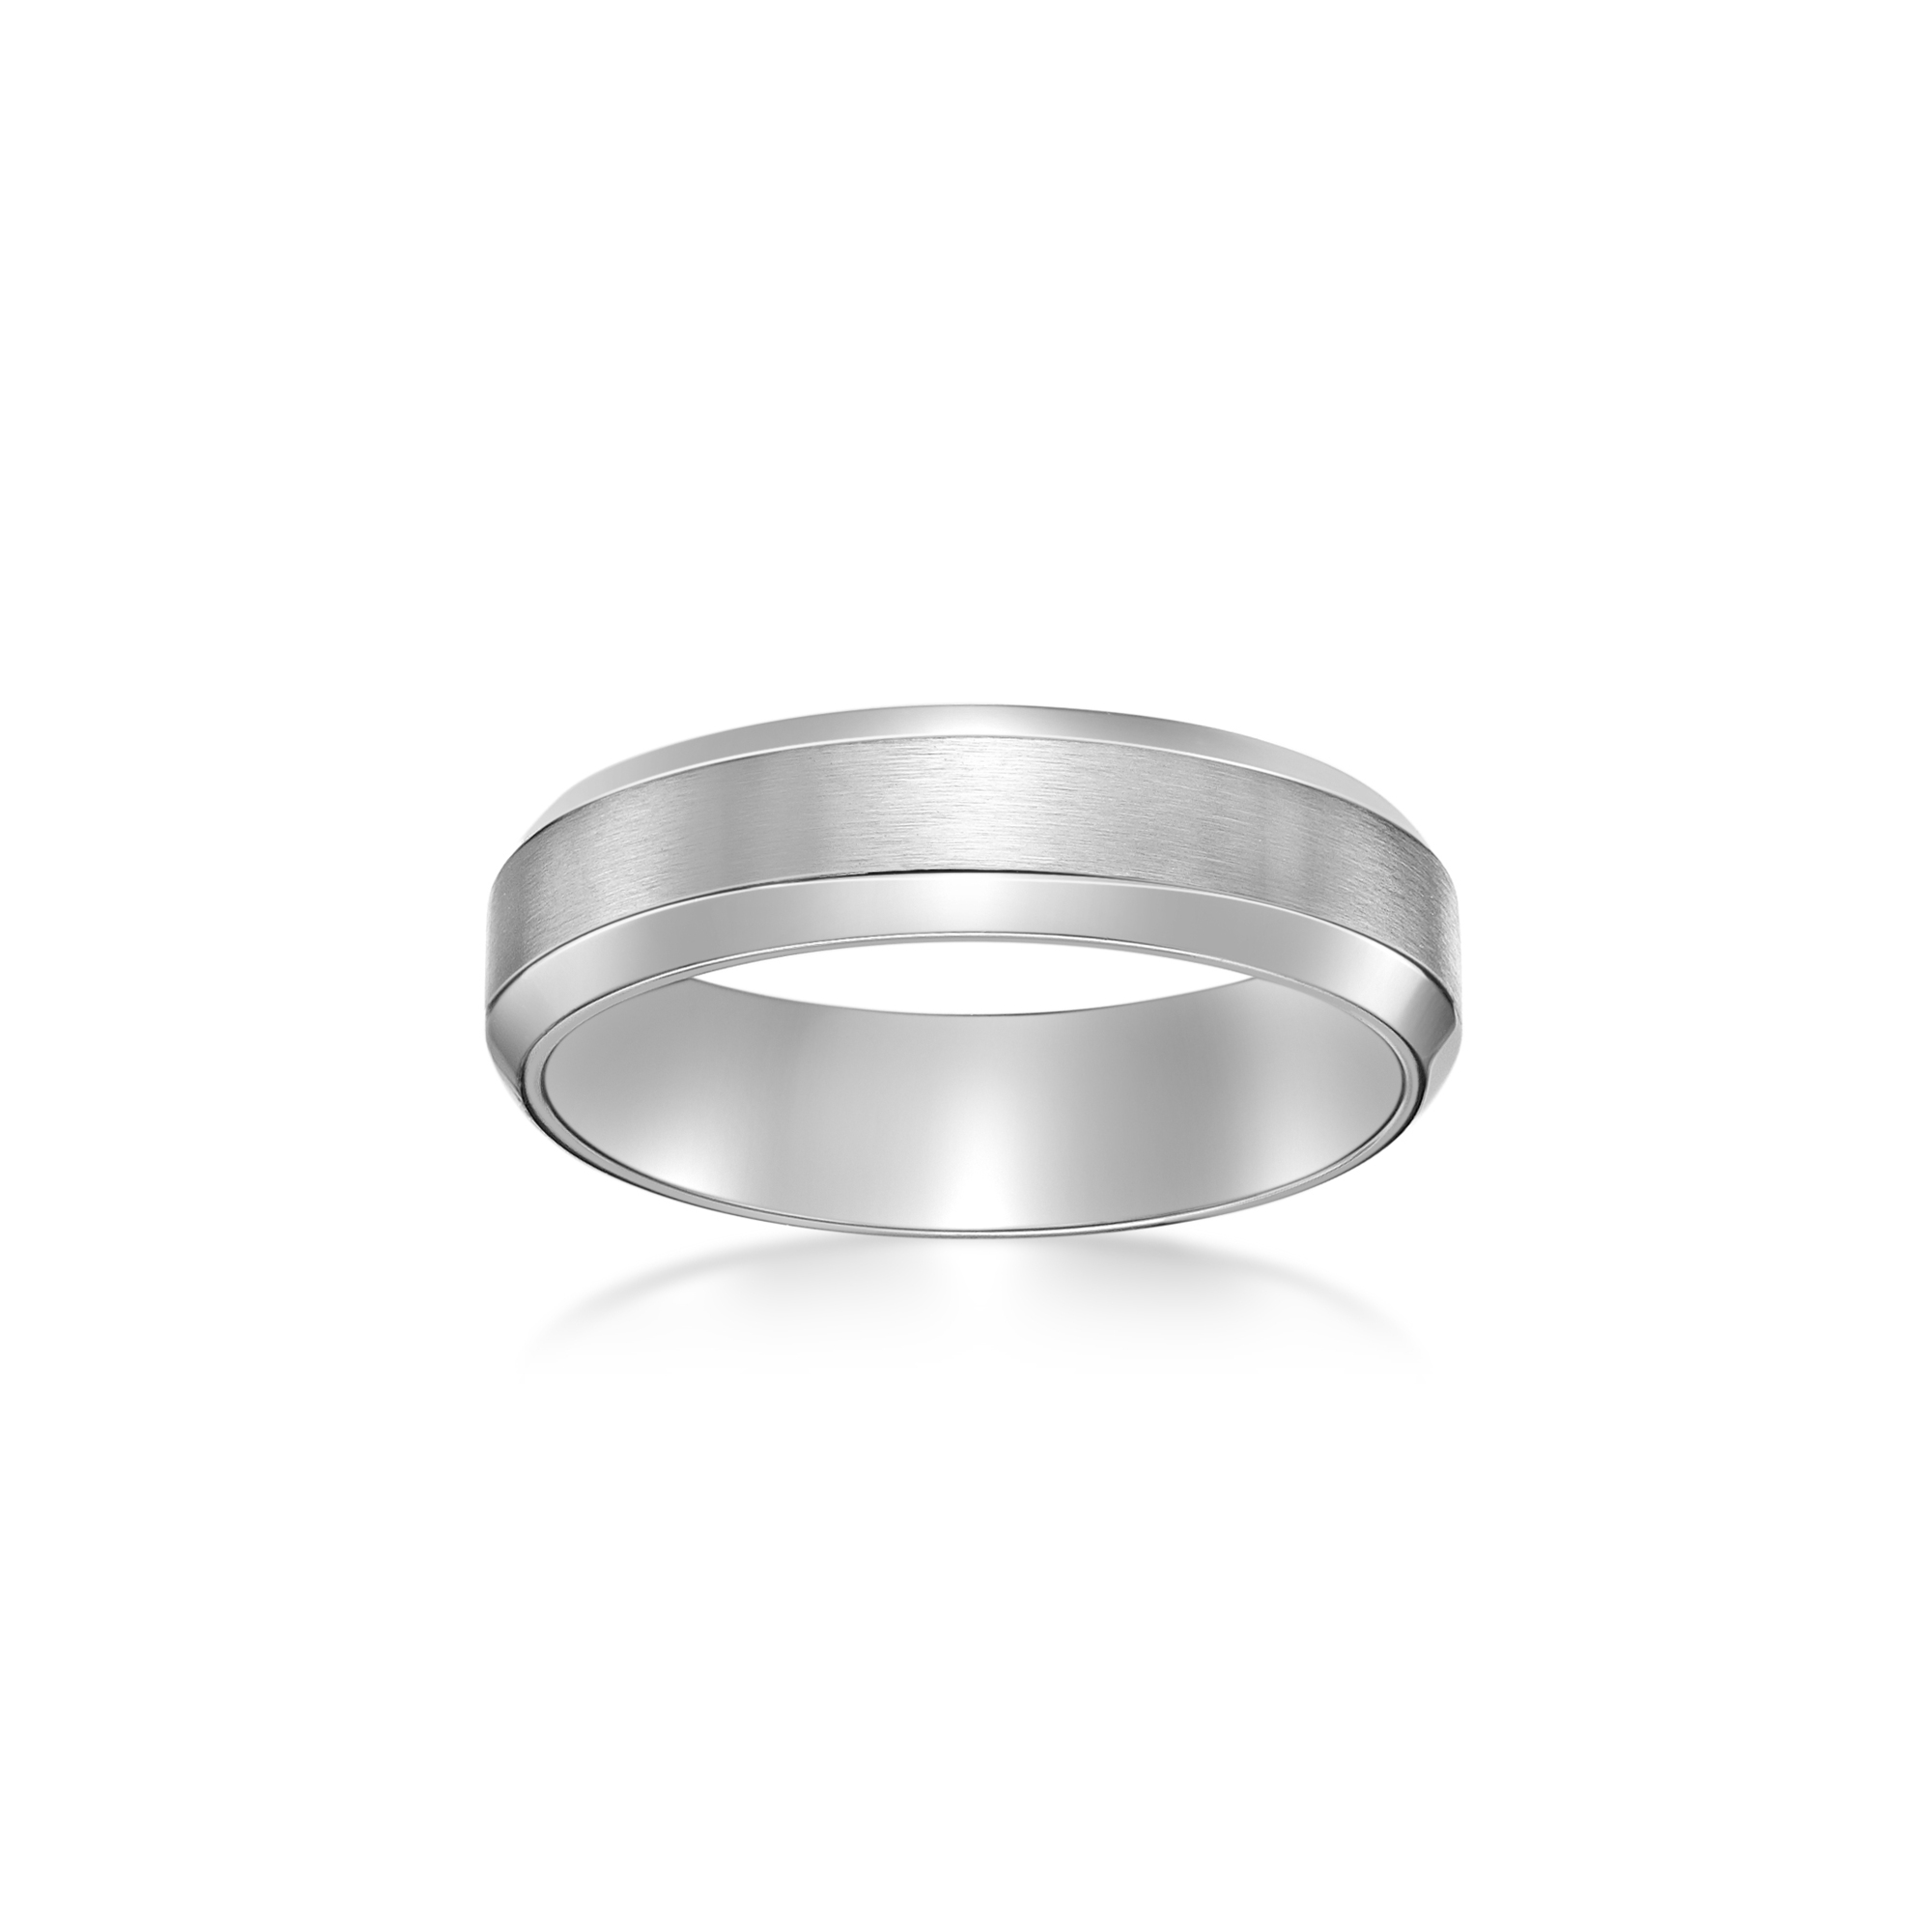 Men's Stainless Steel Beveled Edge Ring - 6 MM | Metro Jewelry